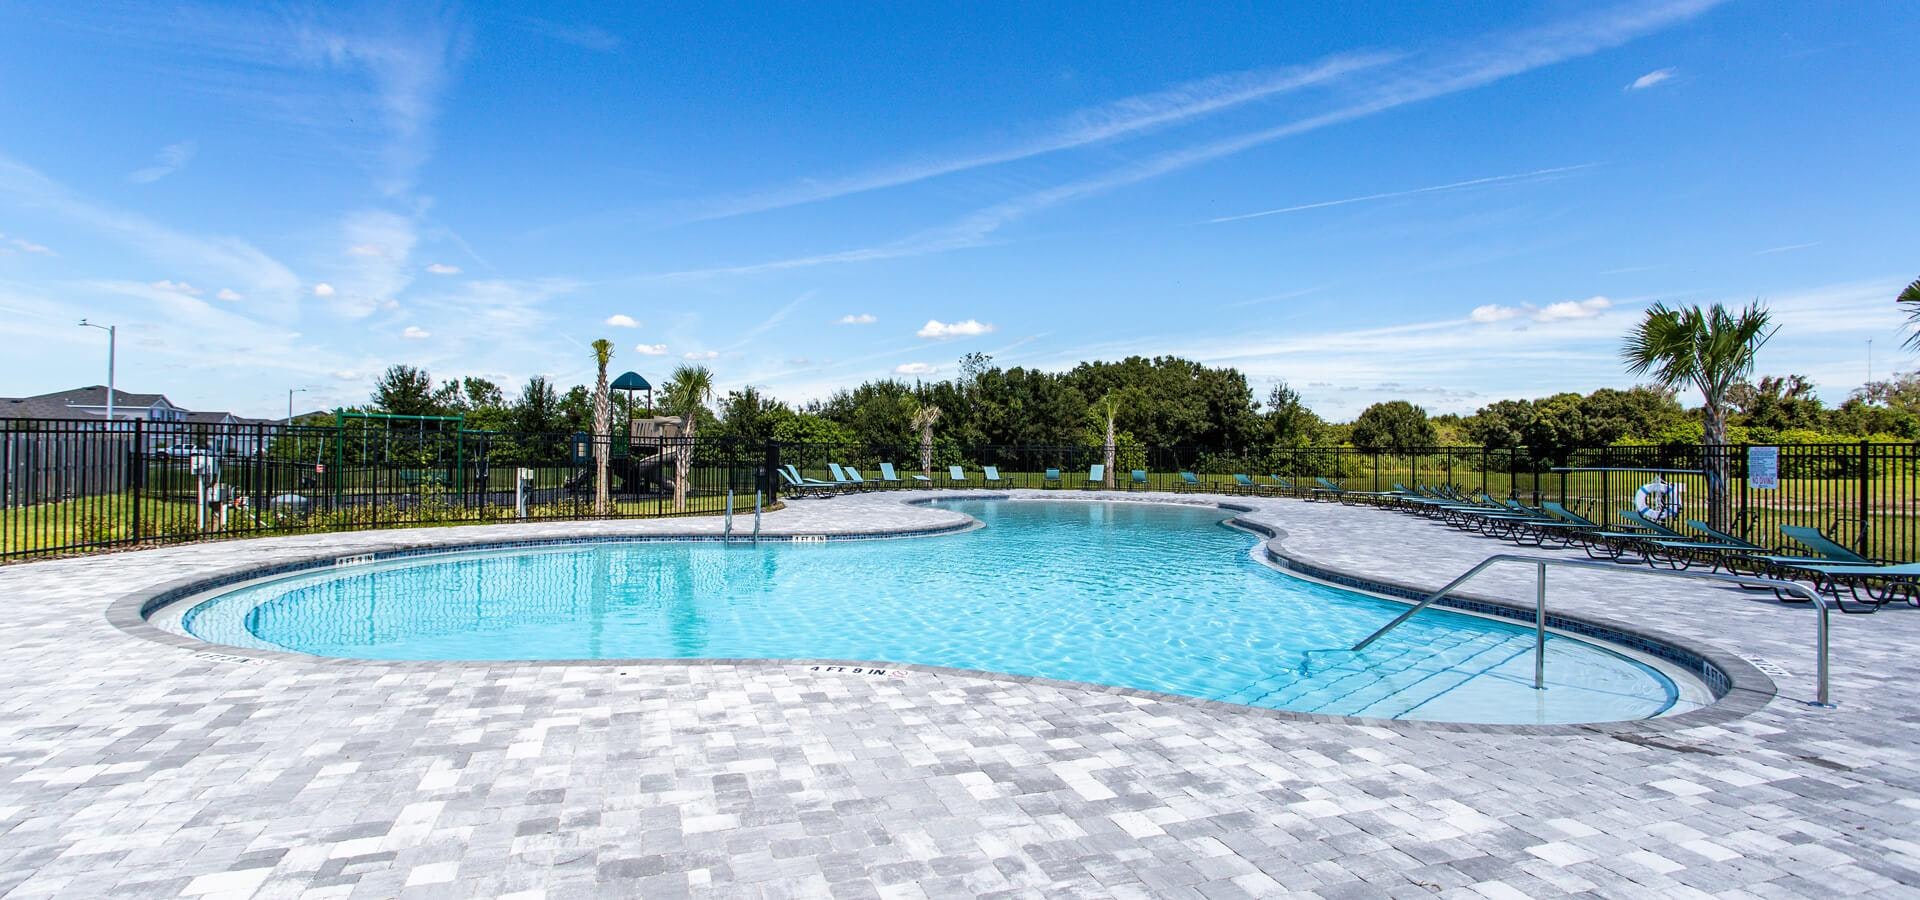 Swimming pool amenity at Ridgewood in Riverview, FL